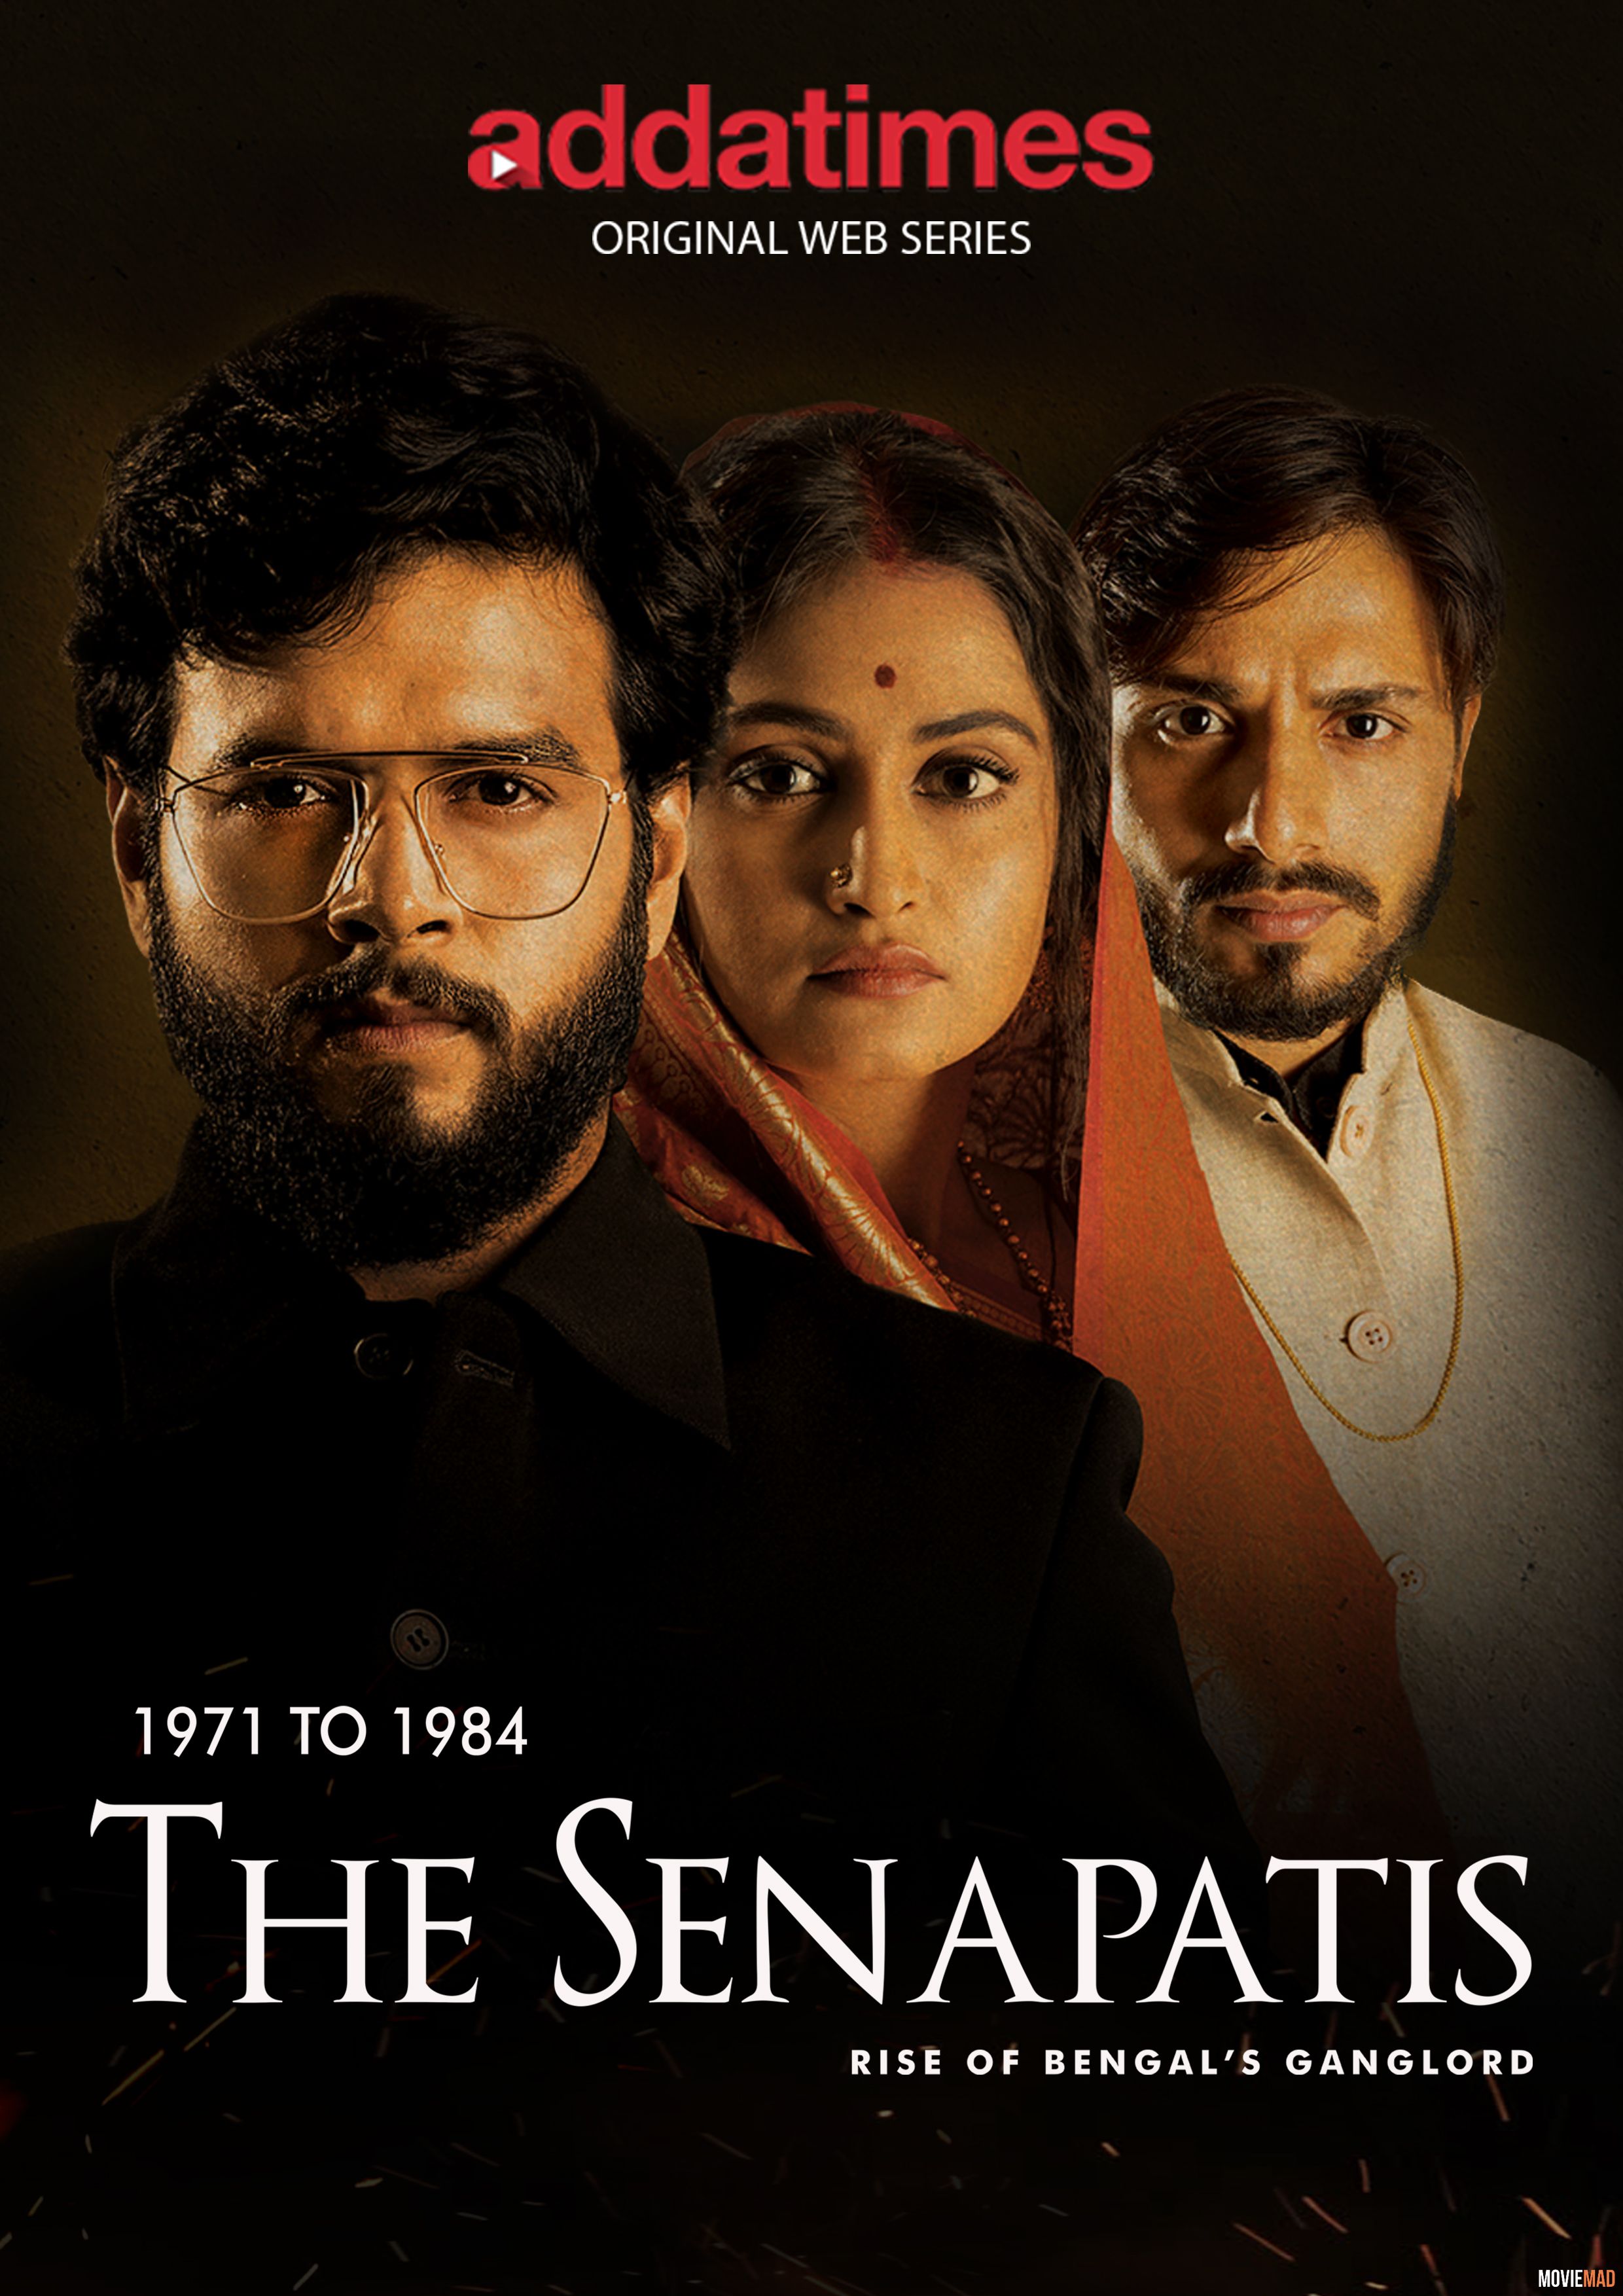 The Senapatis S02 2021 Bengali Complete Addatimes Original Full Web Series 720p 480p